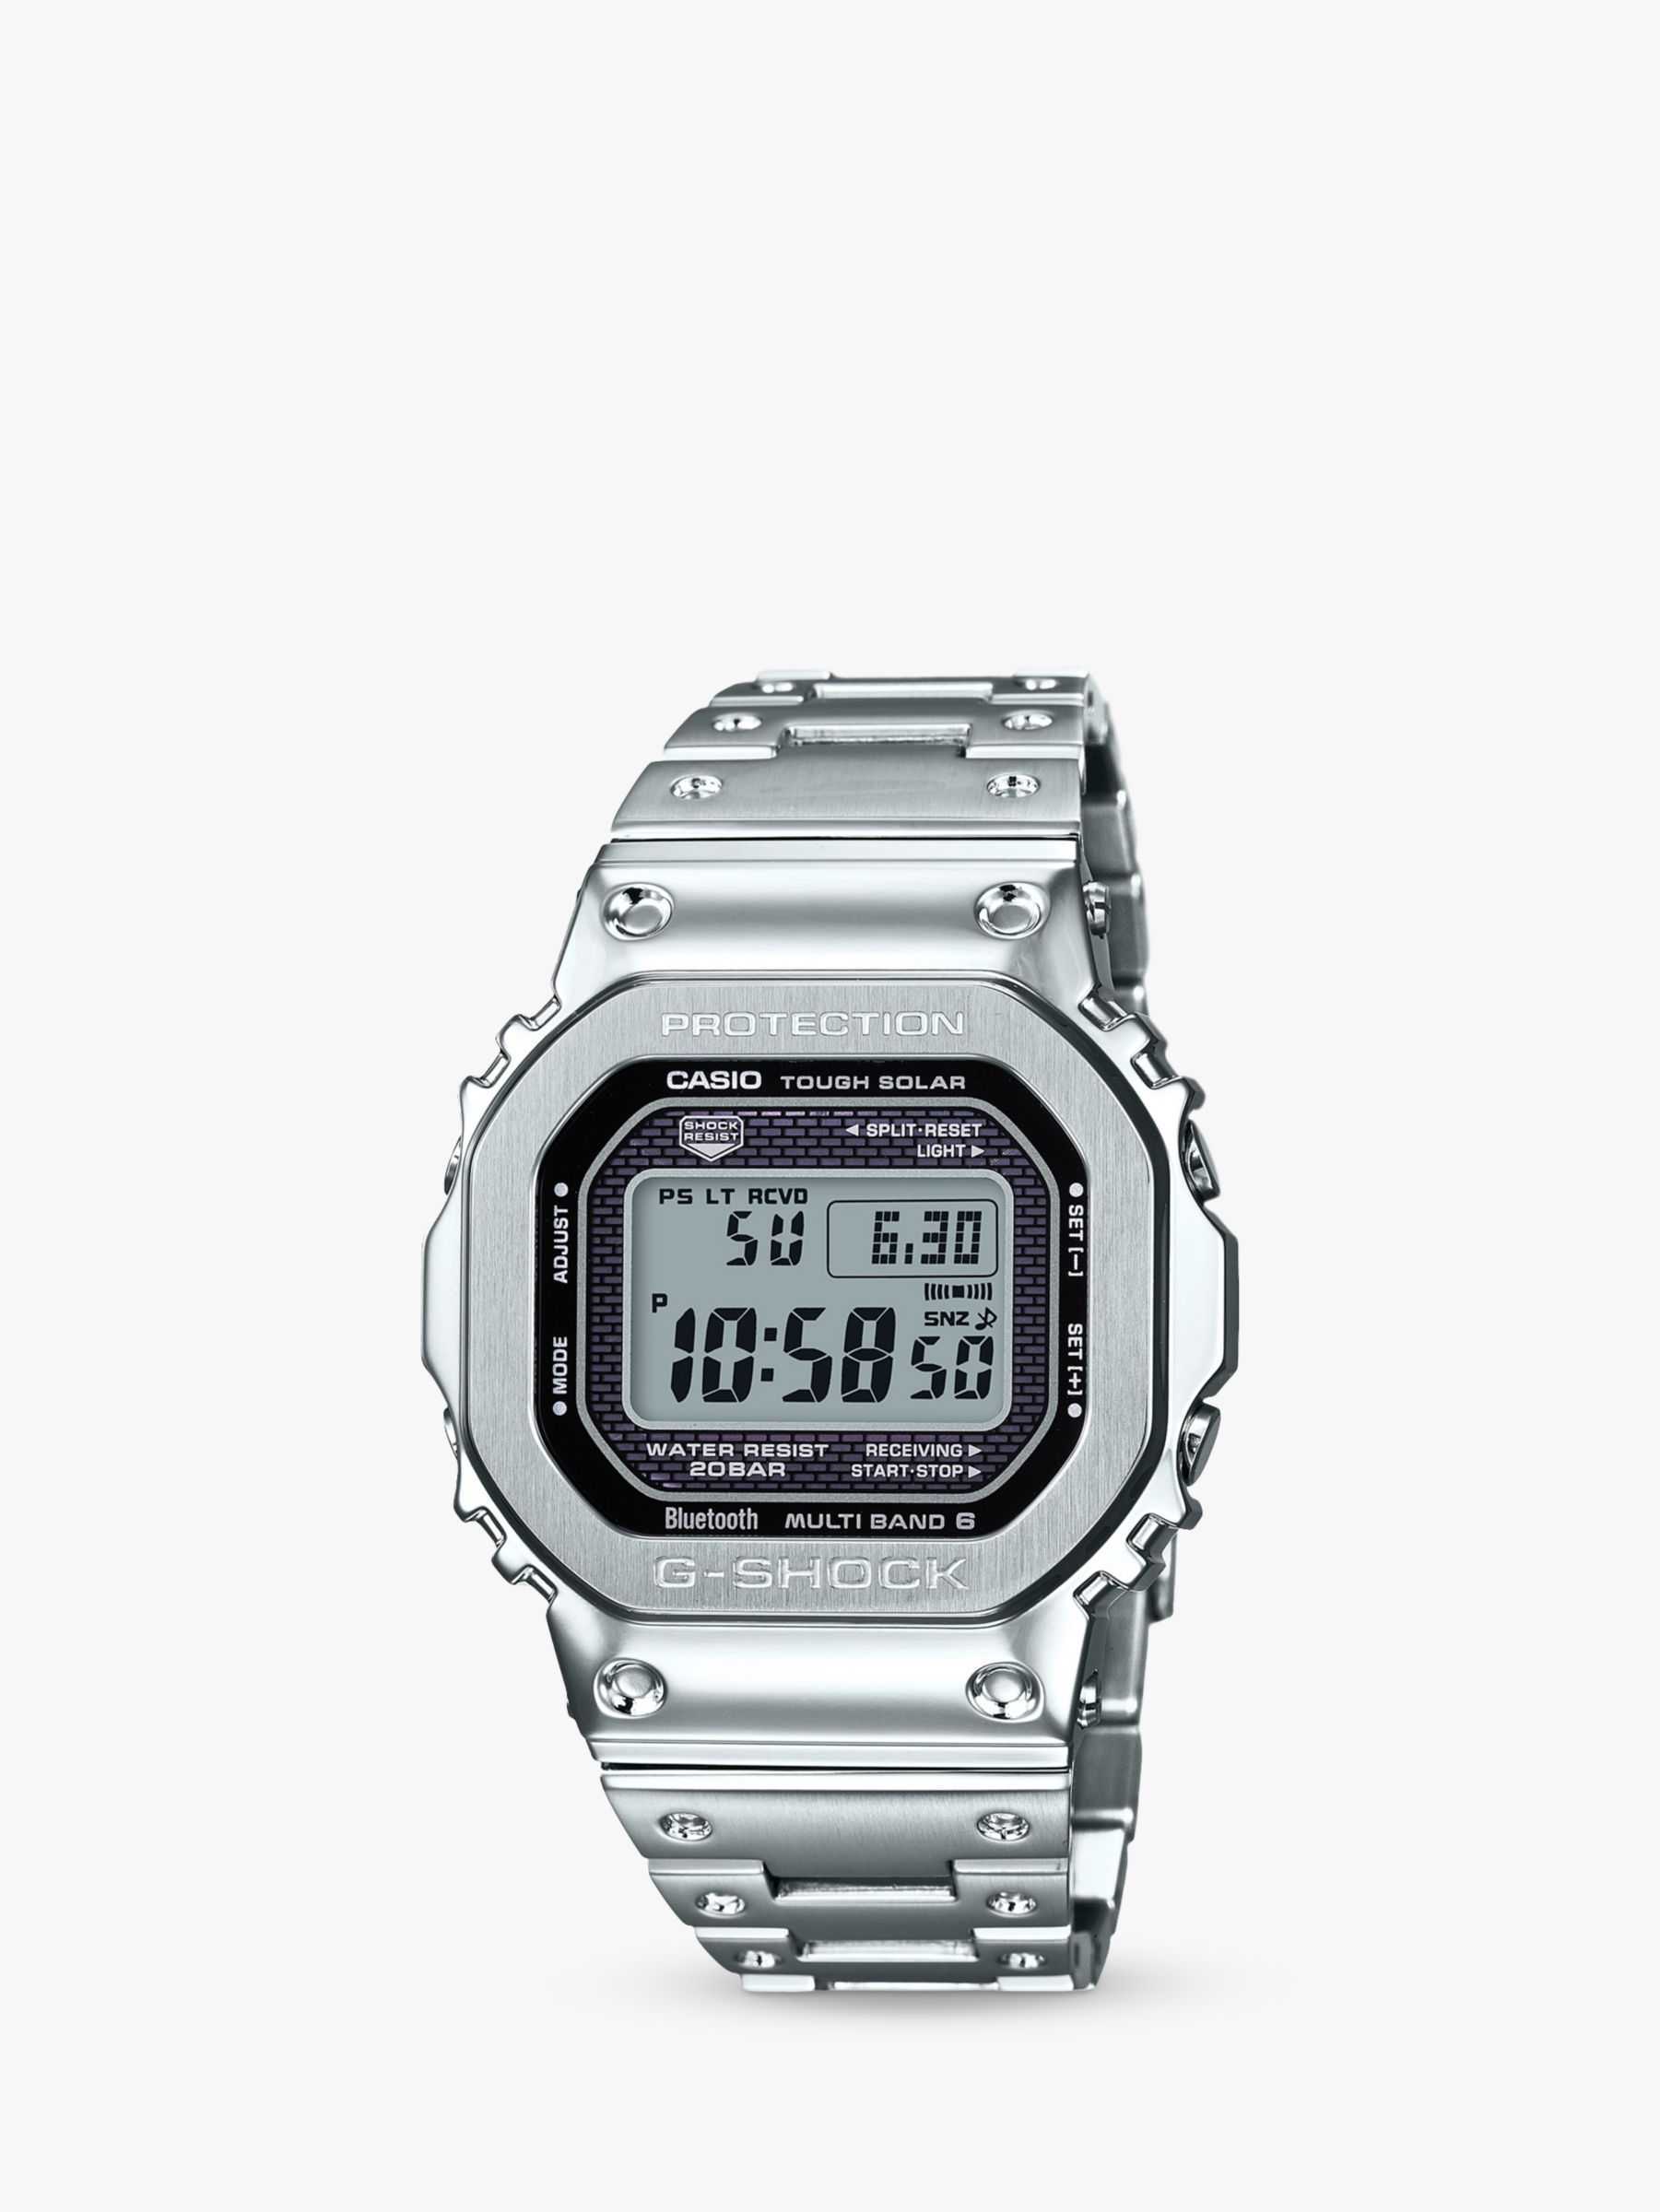 Luxury & Fashion Digital Watches Collection, G-SHOCK